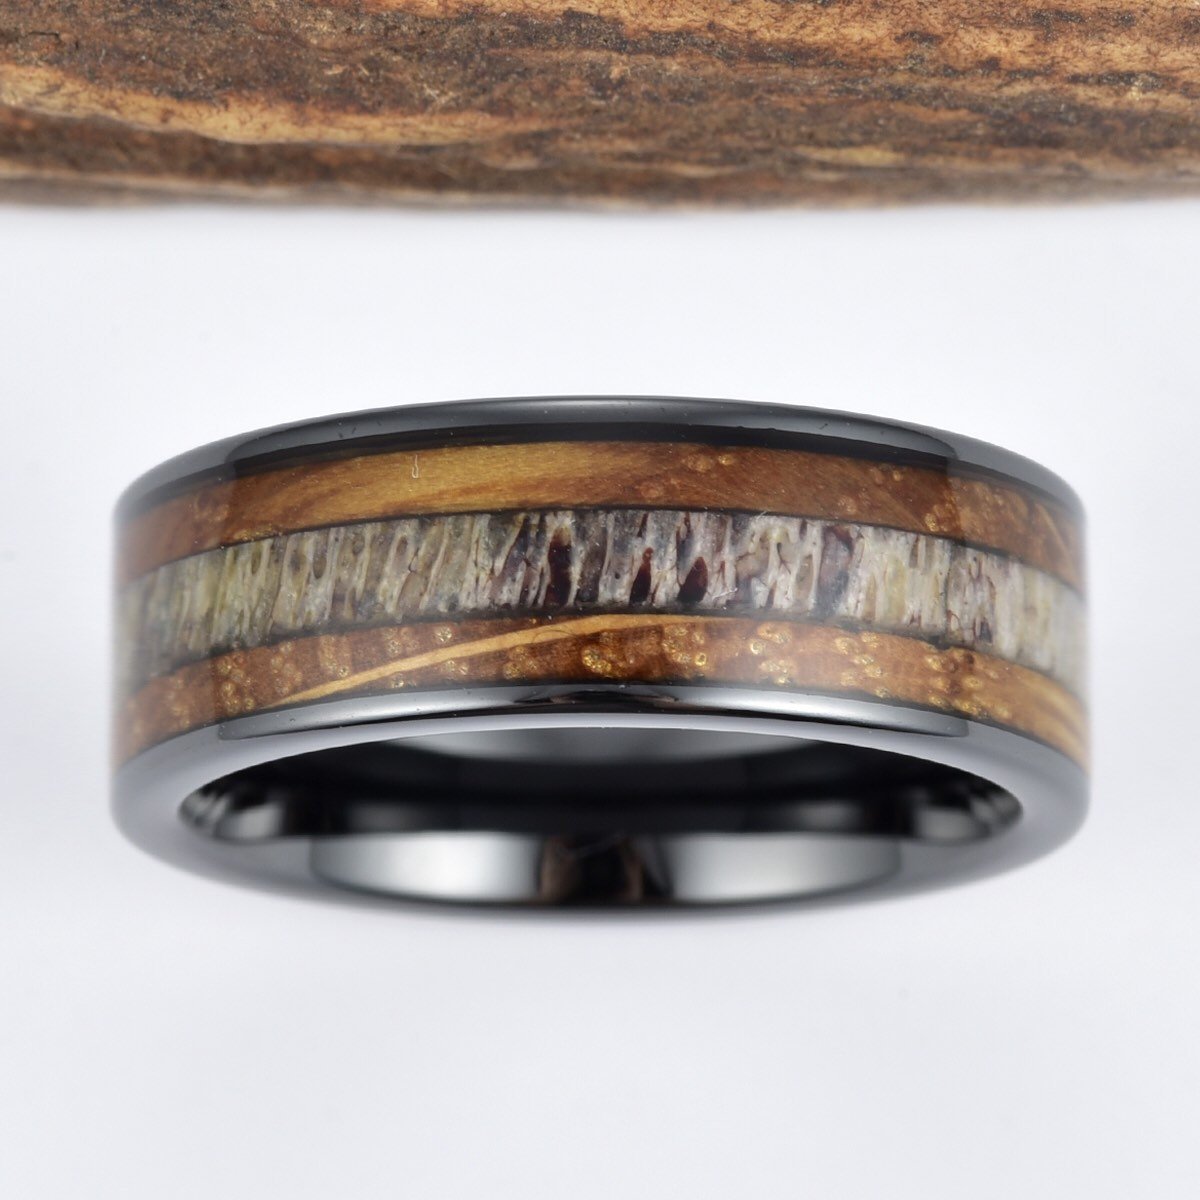 Whisky Barrel Wood Antler Black Ceramic Ring Men's Wedding Band 8MM